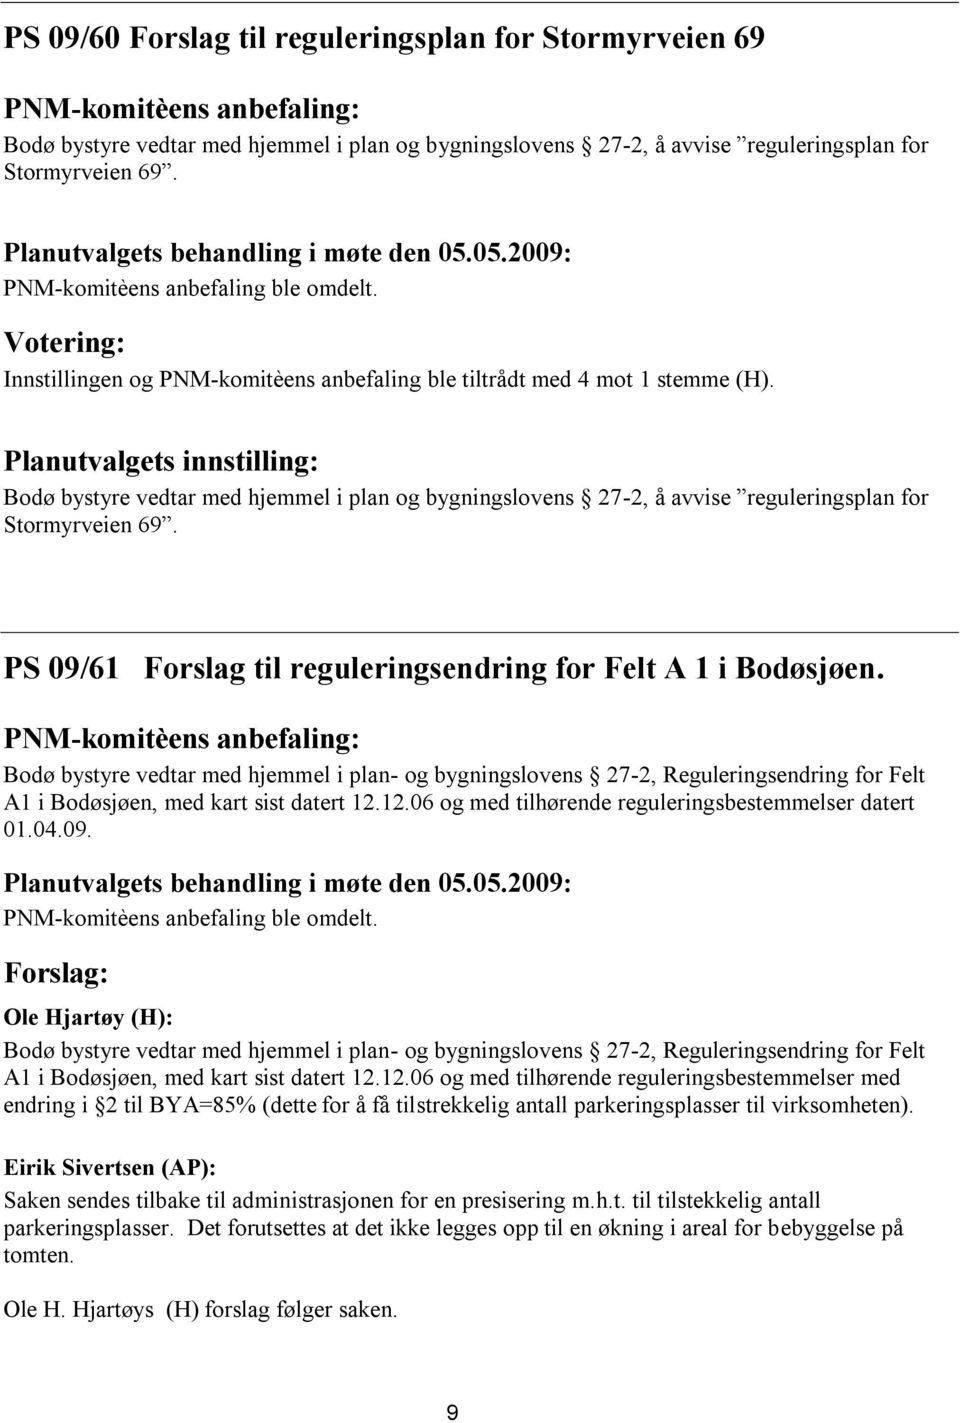 PS 09/61 Forslag til reguleringsendring for Felt A 1 i Bodøsjøen. Bodø bystyre vedtar med hjemmel i plan- og bygningslovens 27-2, Reguleringsendring for Felt A1 i Bodøsjøen, med kart sist datert 12.